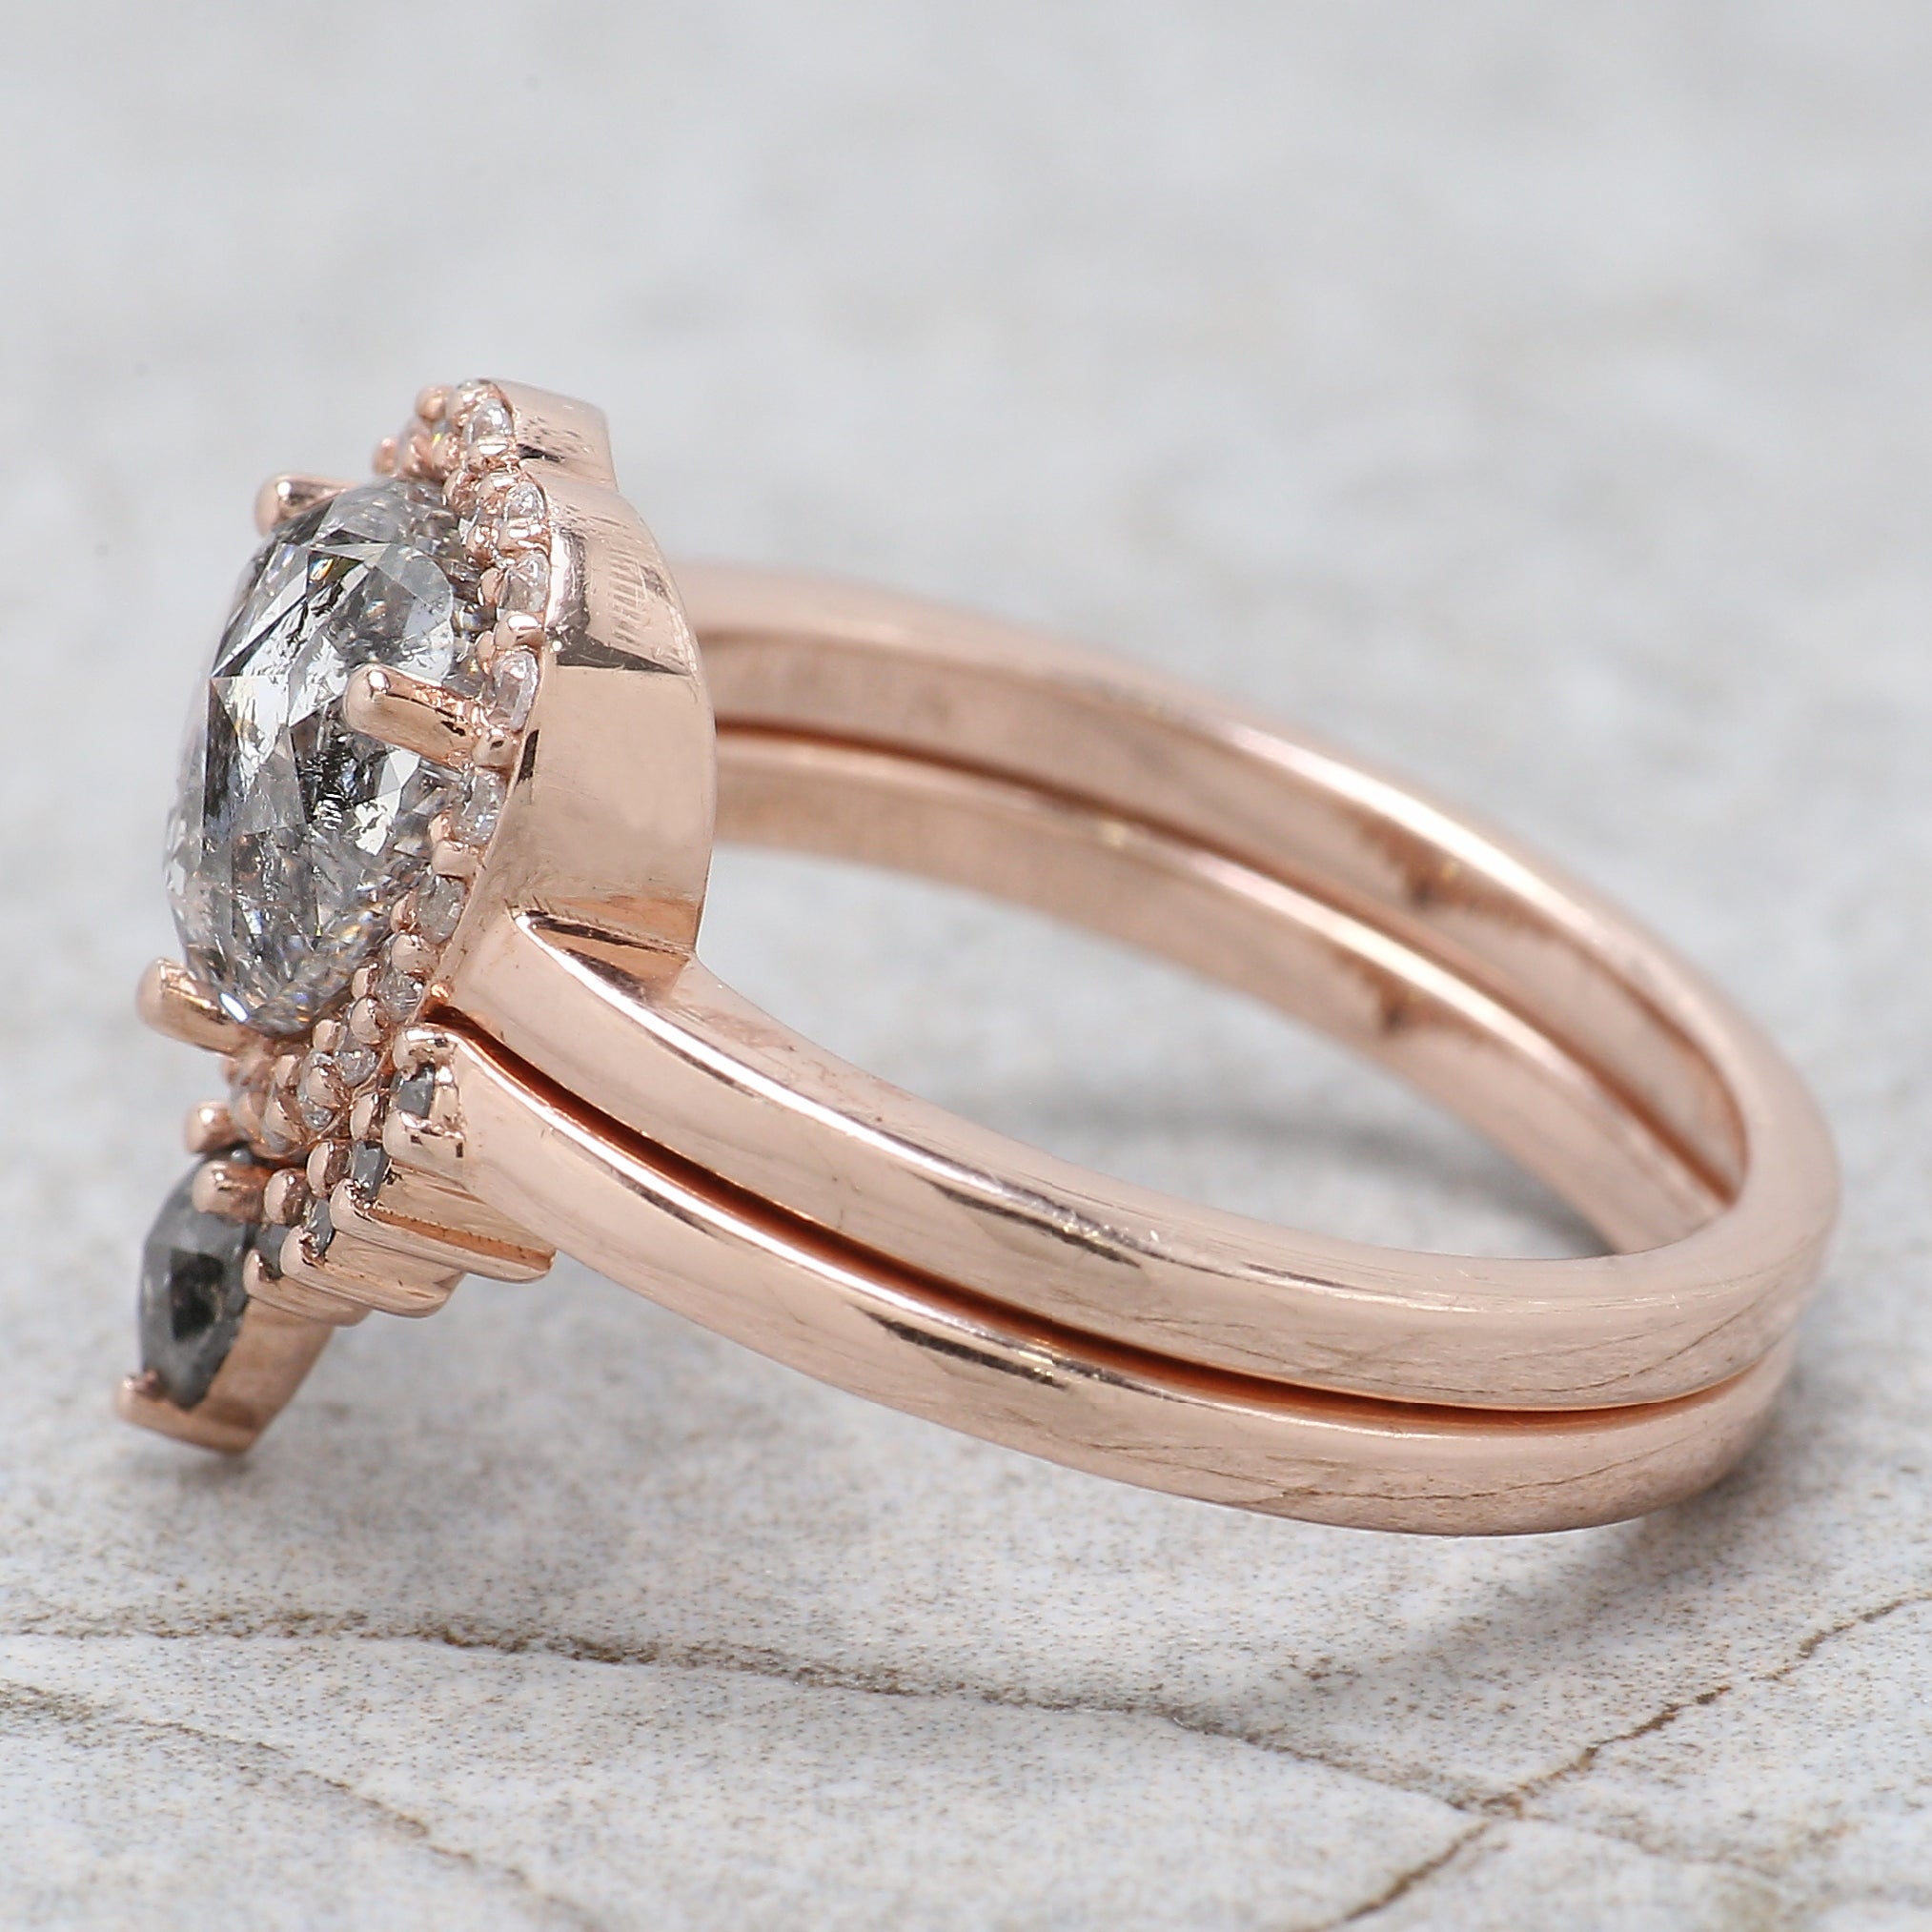 Heart Salt And Pepper Diamond Ring 1.54 Ct 7.09 MM Heart Shape Diamond Ring 14K Solid Rose Gold Silver Engagement Ring Gift For Her QL2598